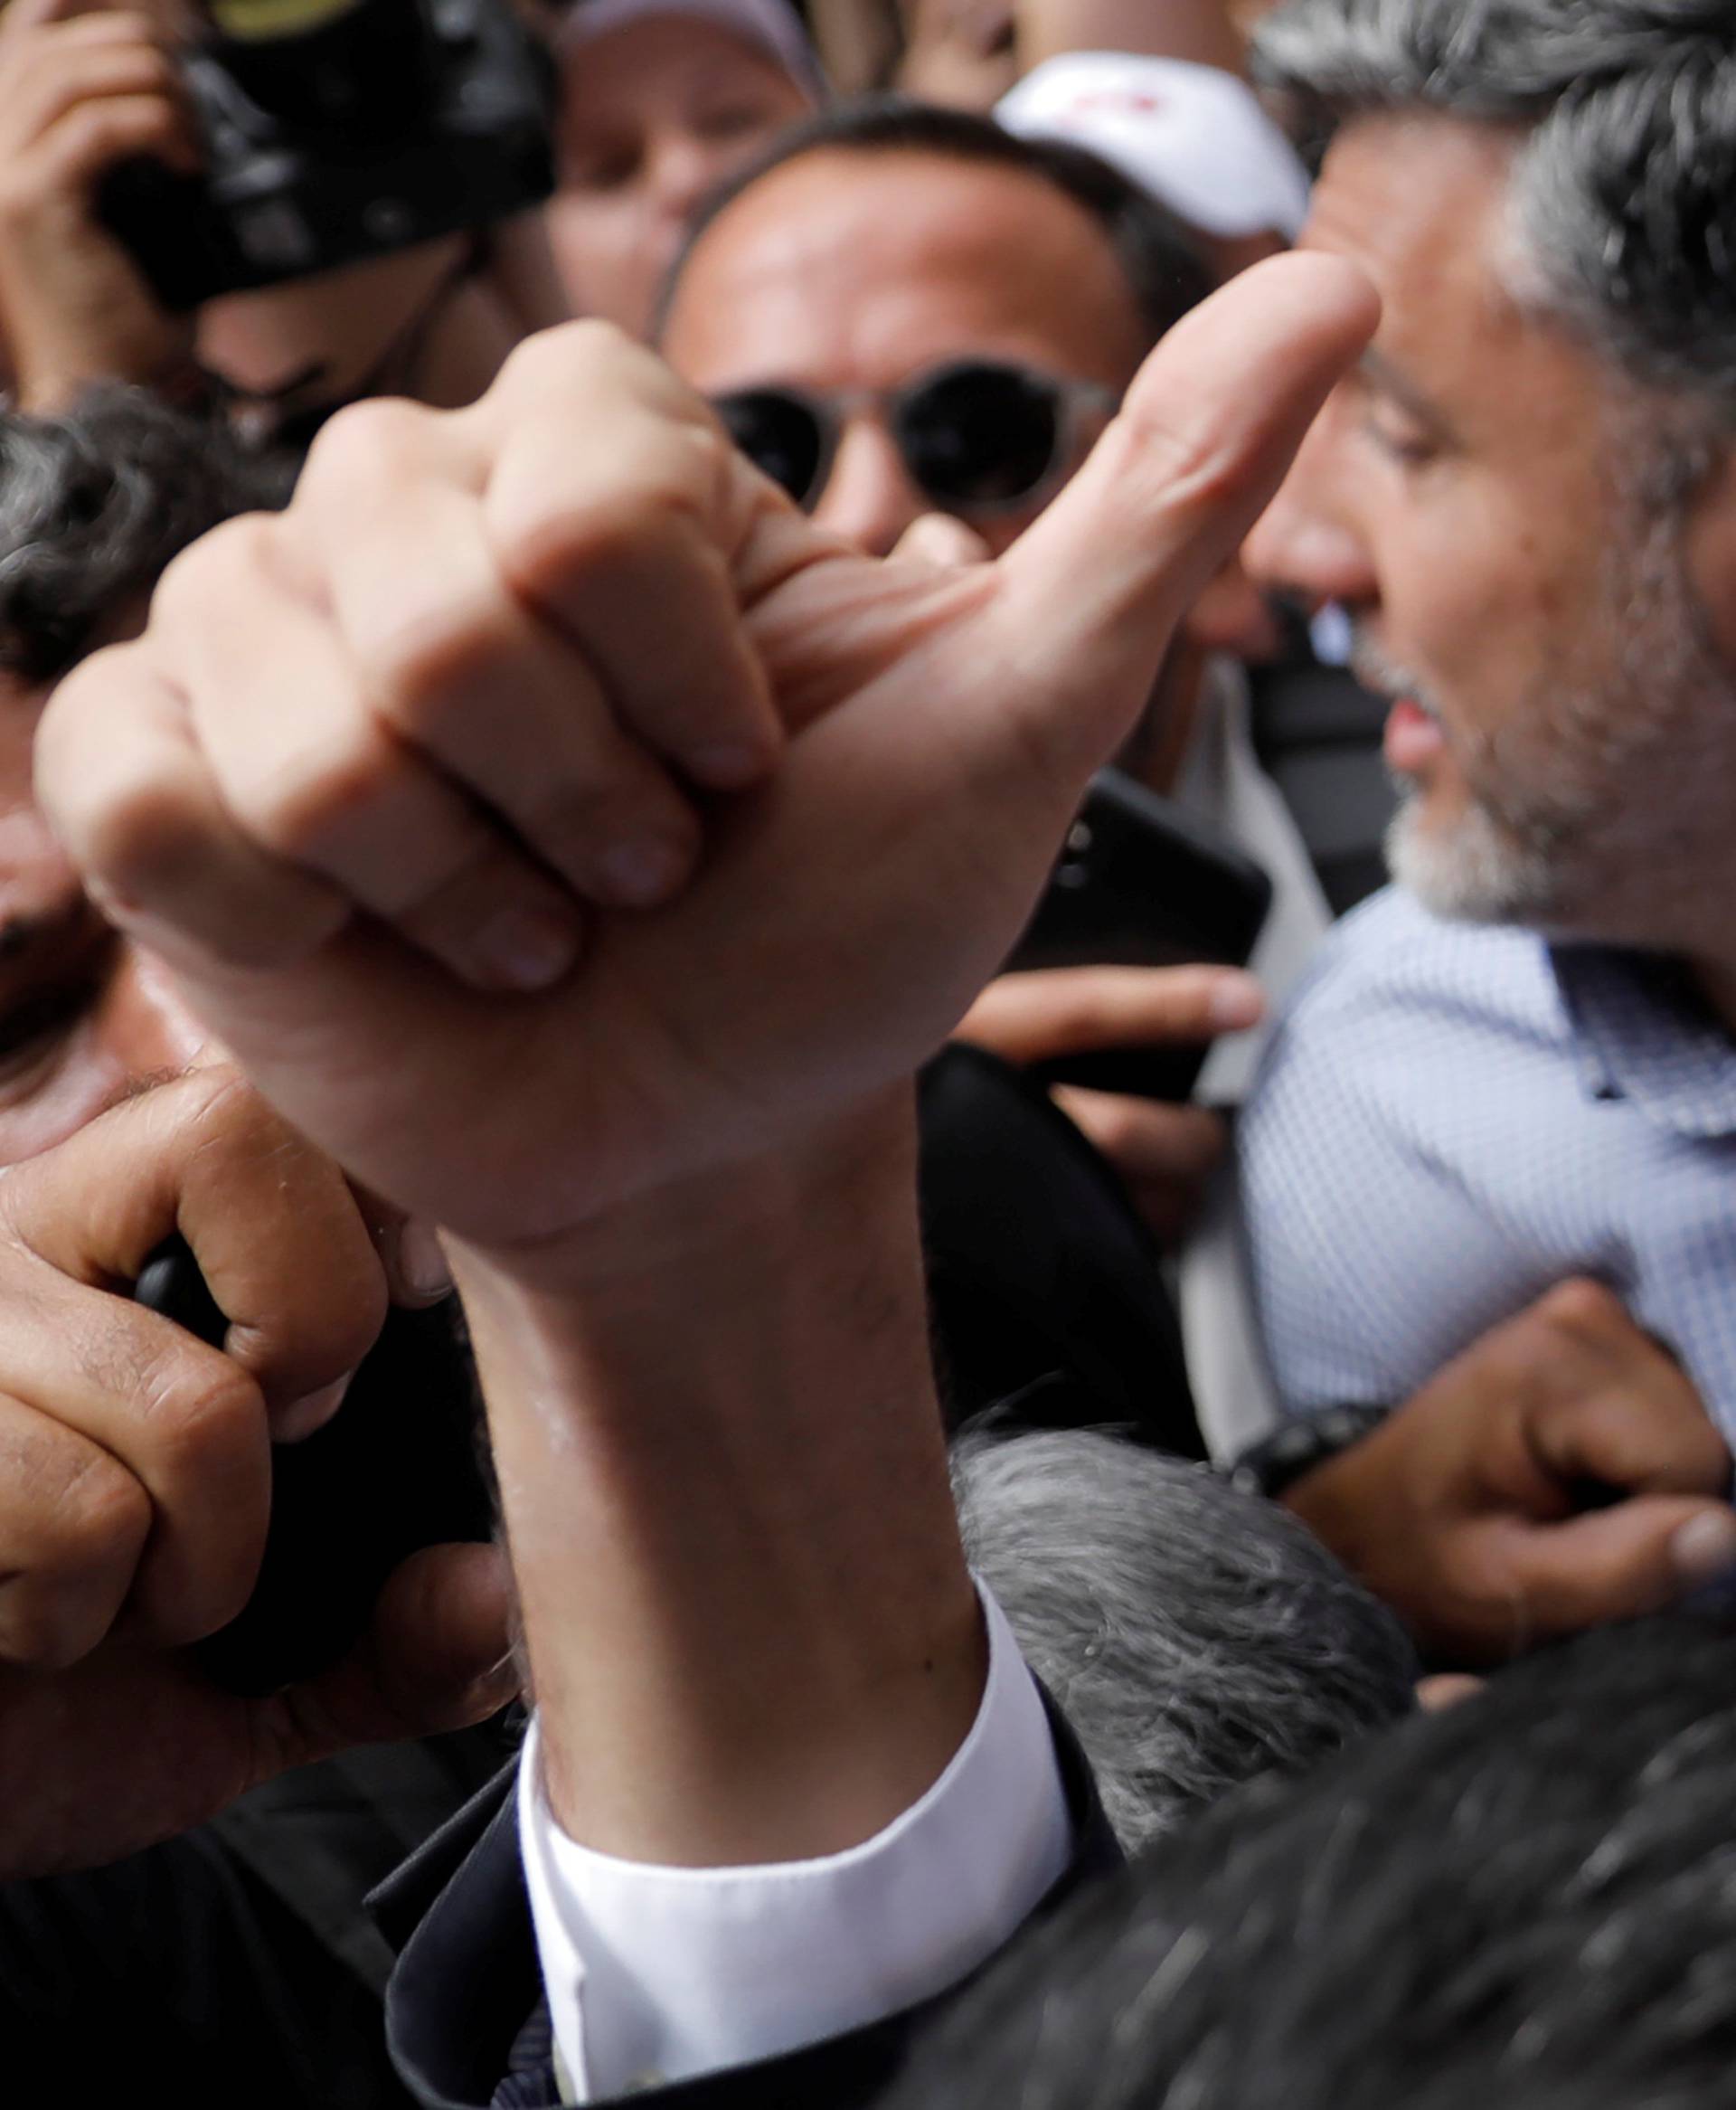 Venezuela's opposition leader Juan Guaido gestures as he arrives for a news conference in Caracas, Venezuela